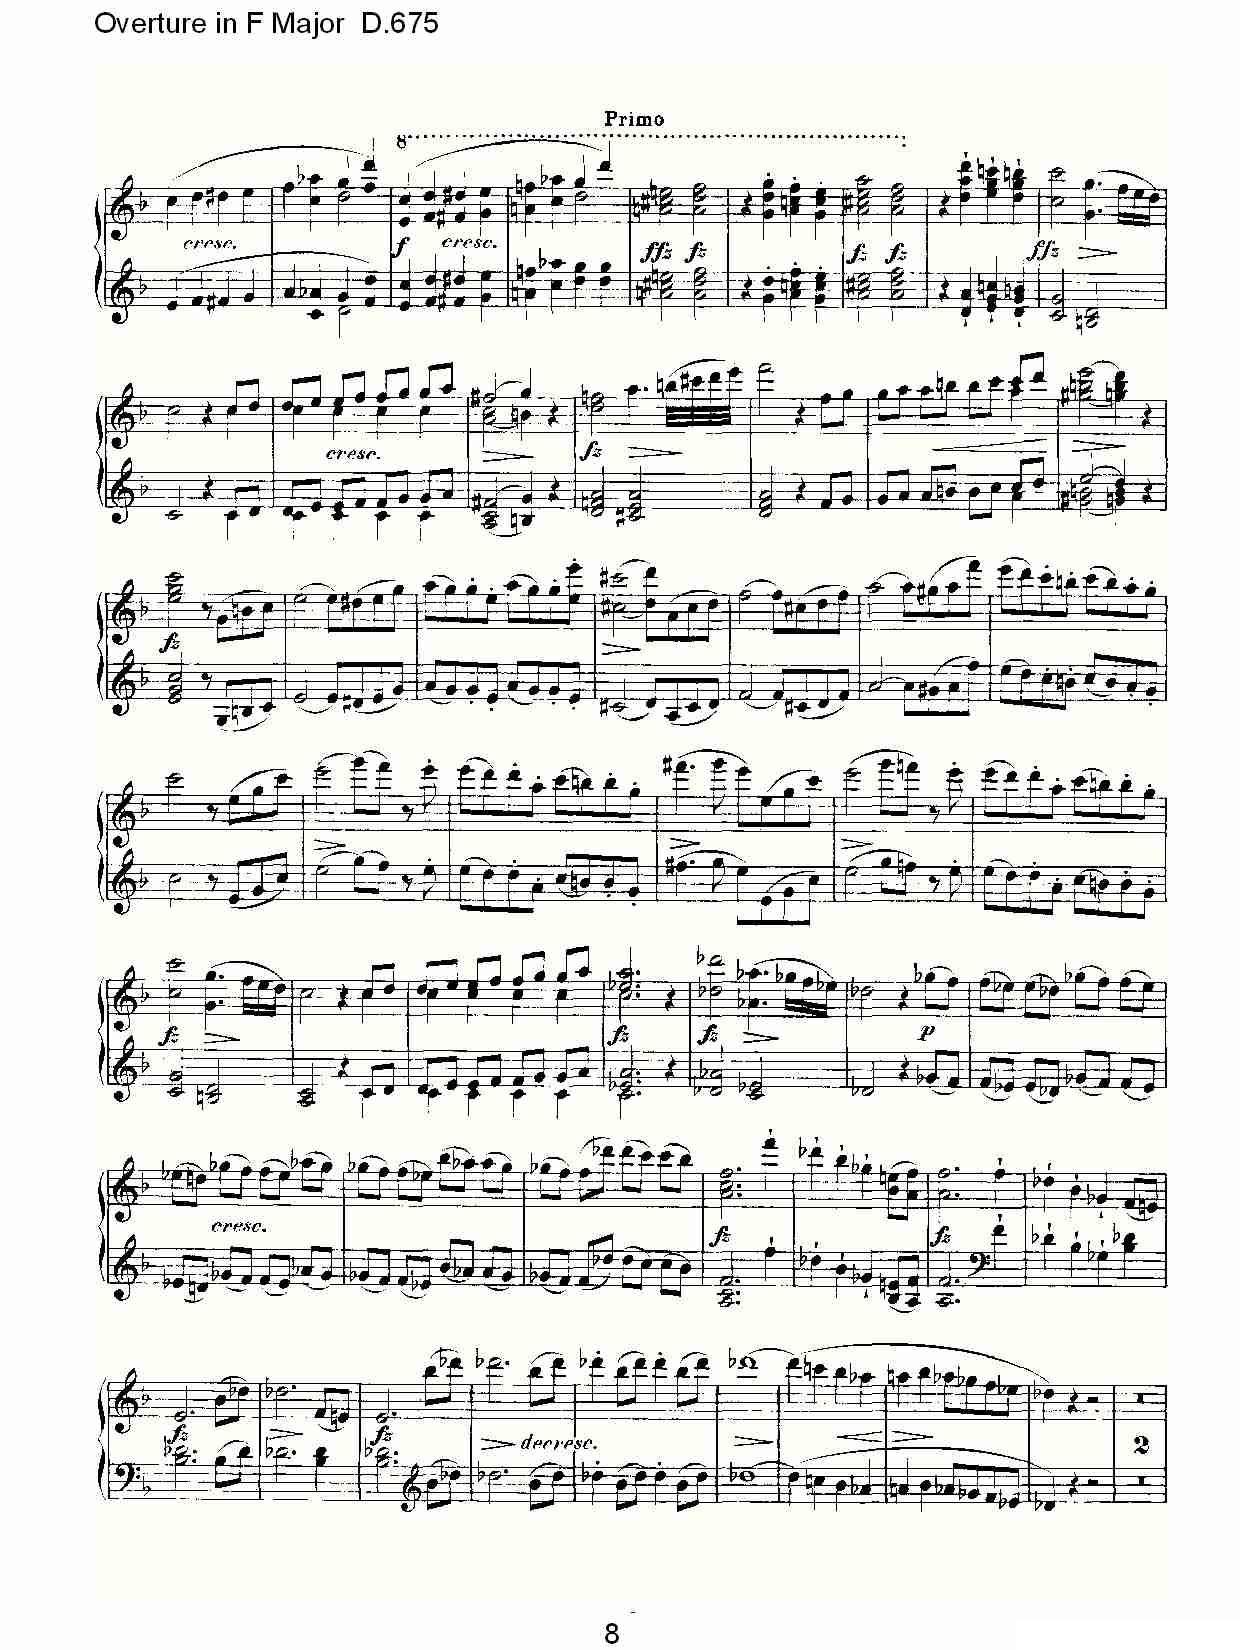 Overture in F Major D.675（Ｆ大调序曲 D.675）钢琴曲谱（图8）